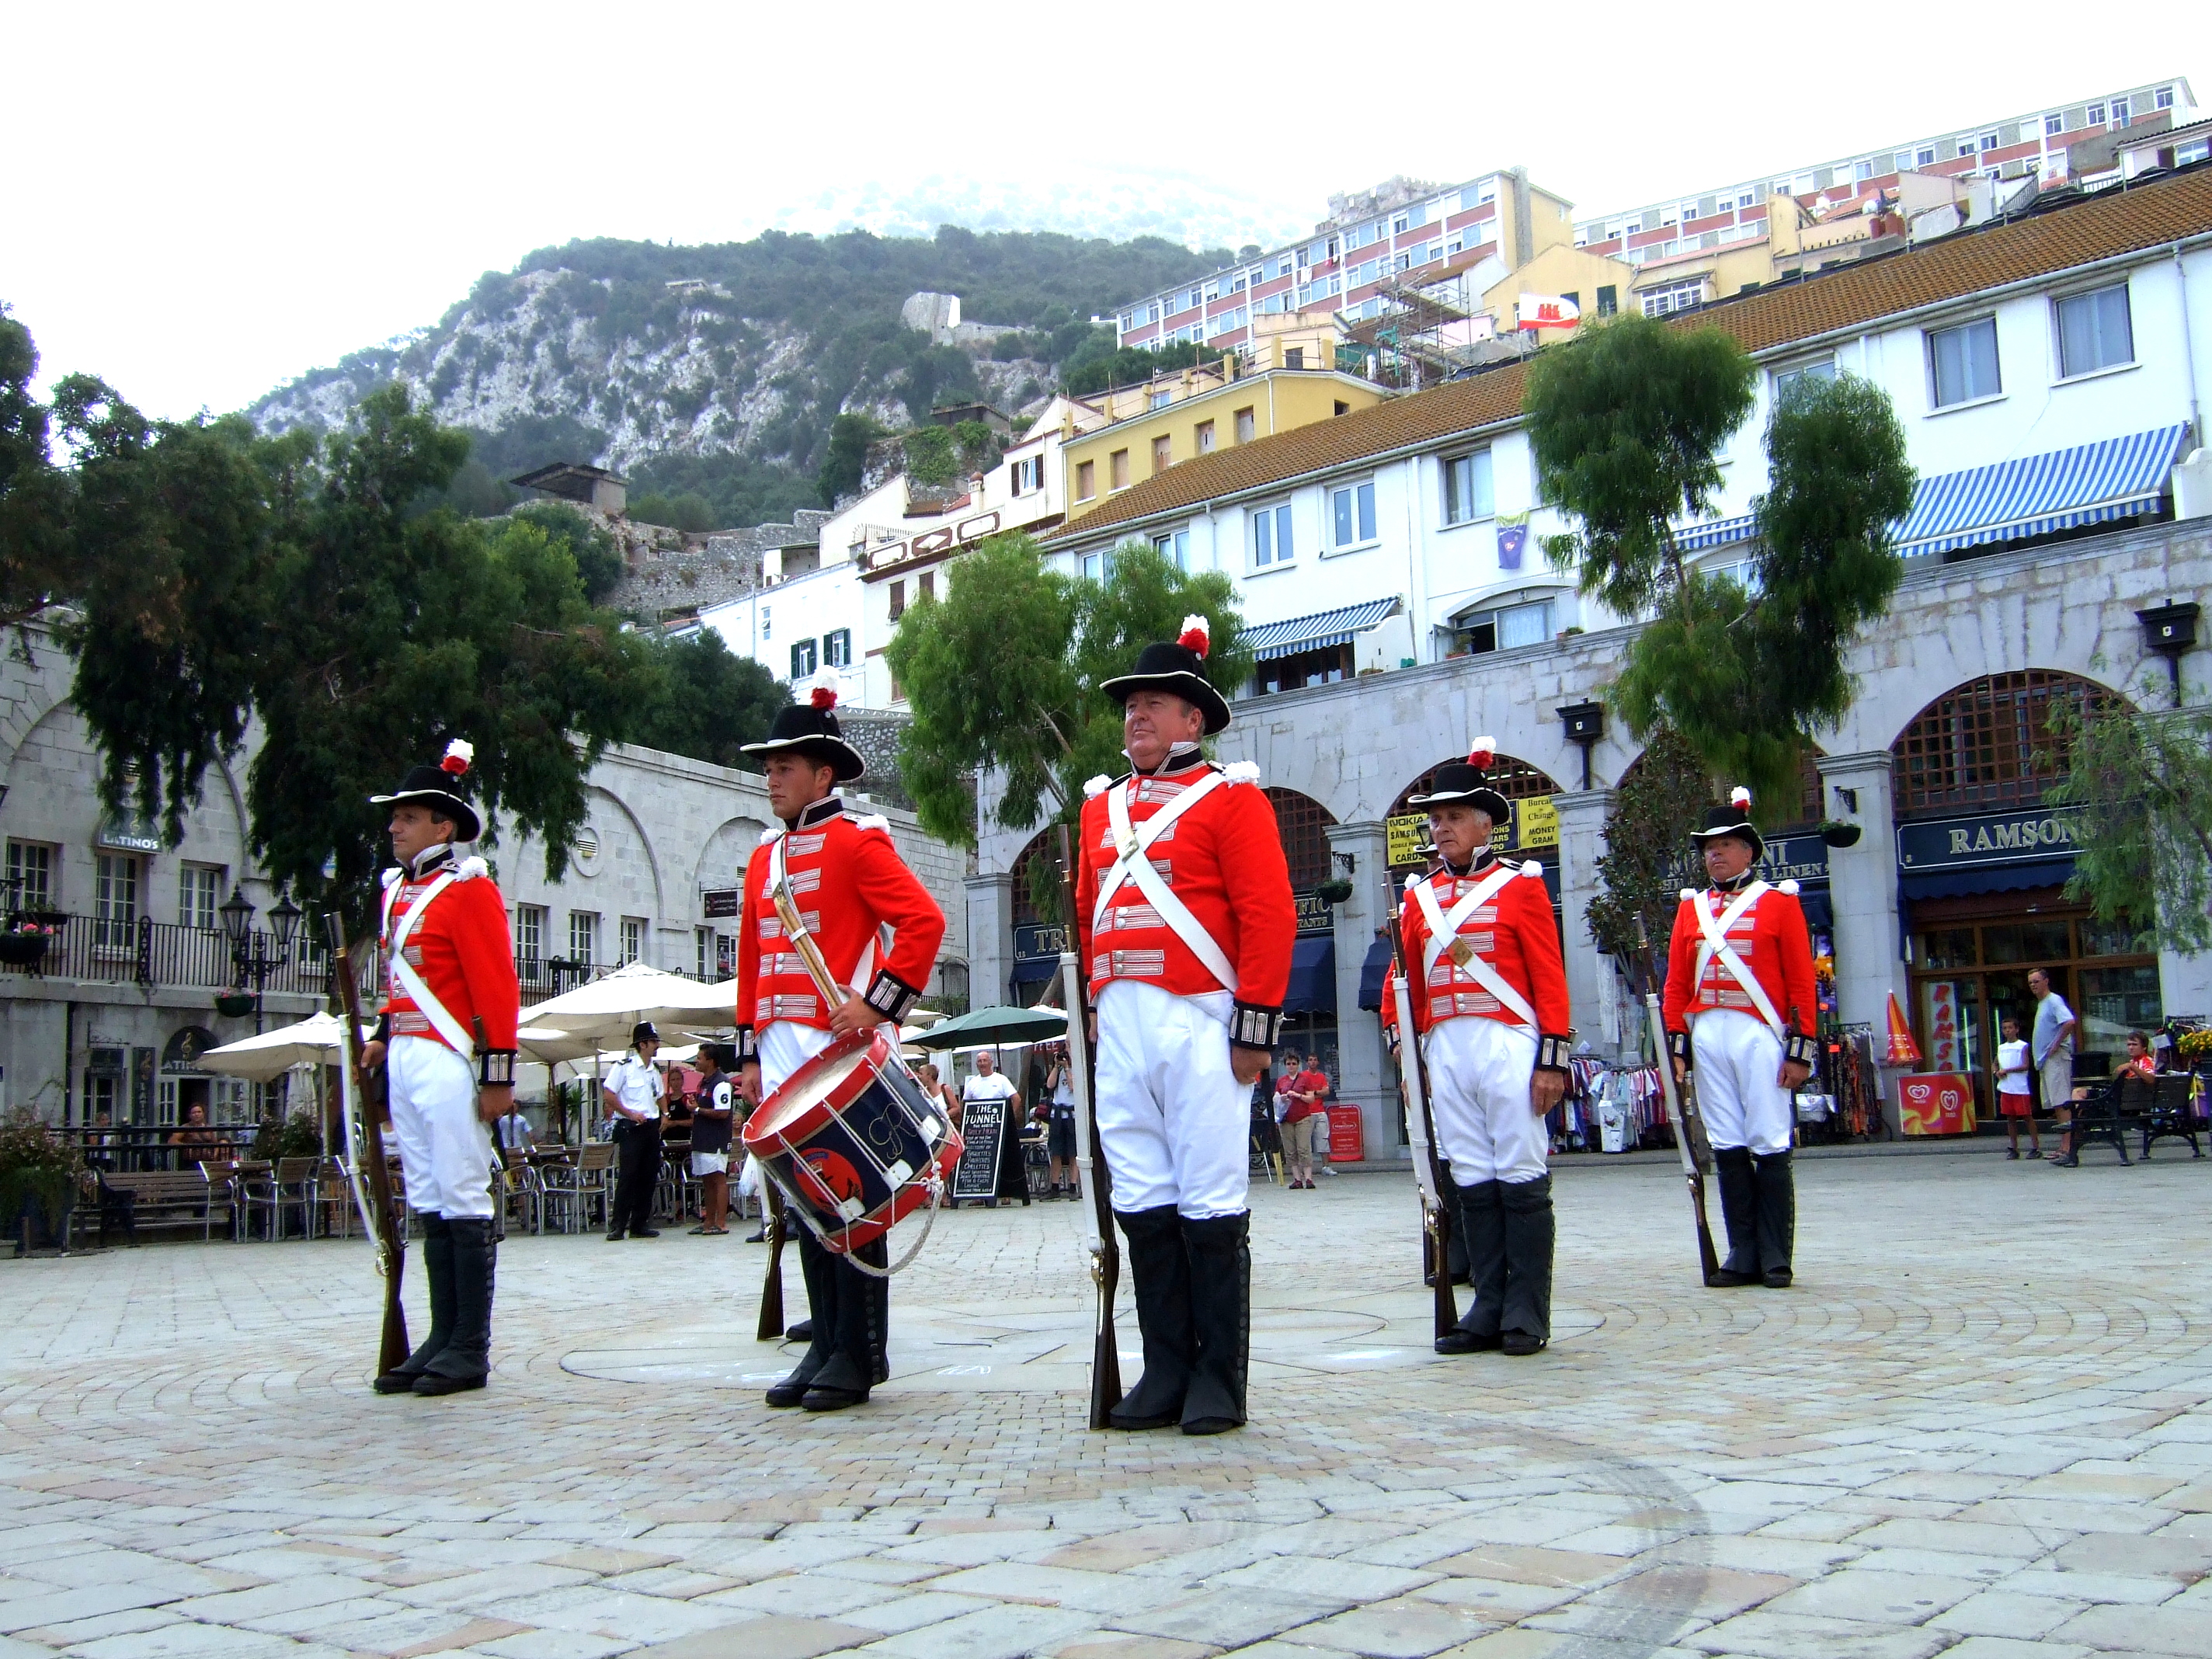 Casemates re-enactment - Gibraltar